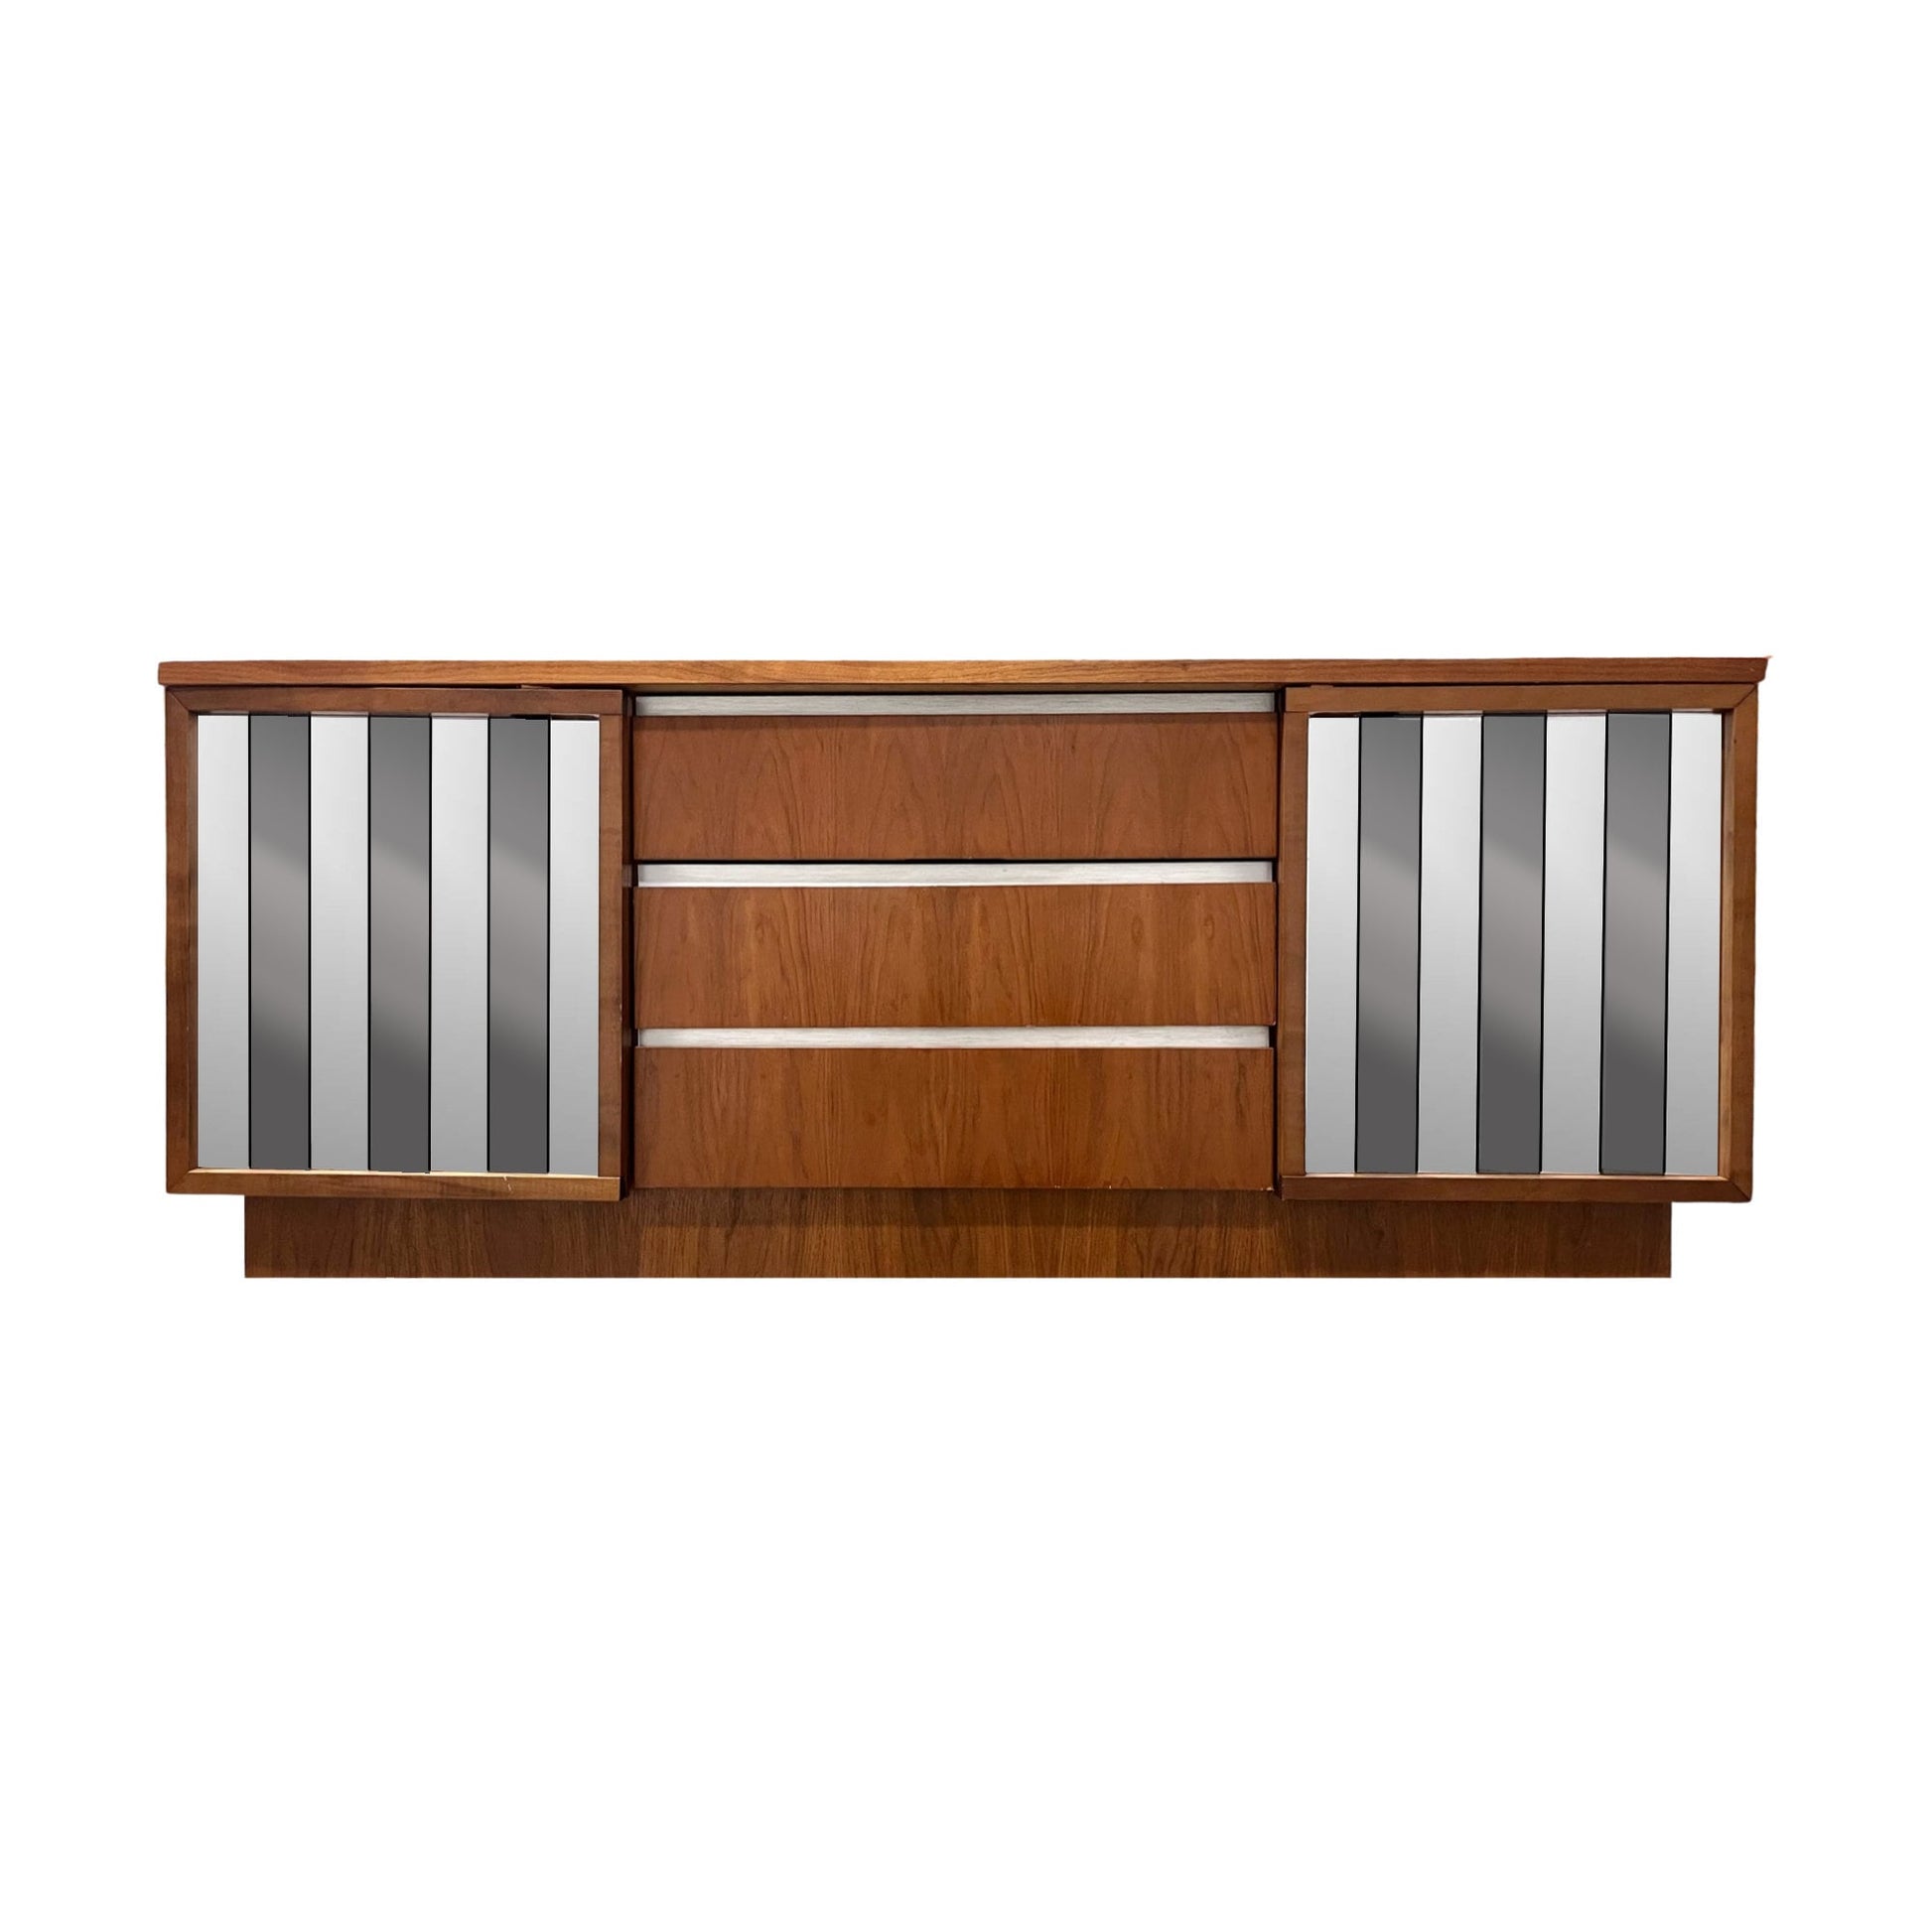 Mid-century modern 9-drawer Lowboy dresser, reflecting Paul Evans' style.